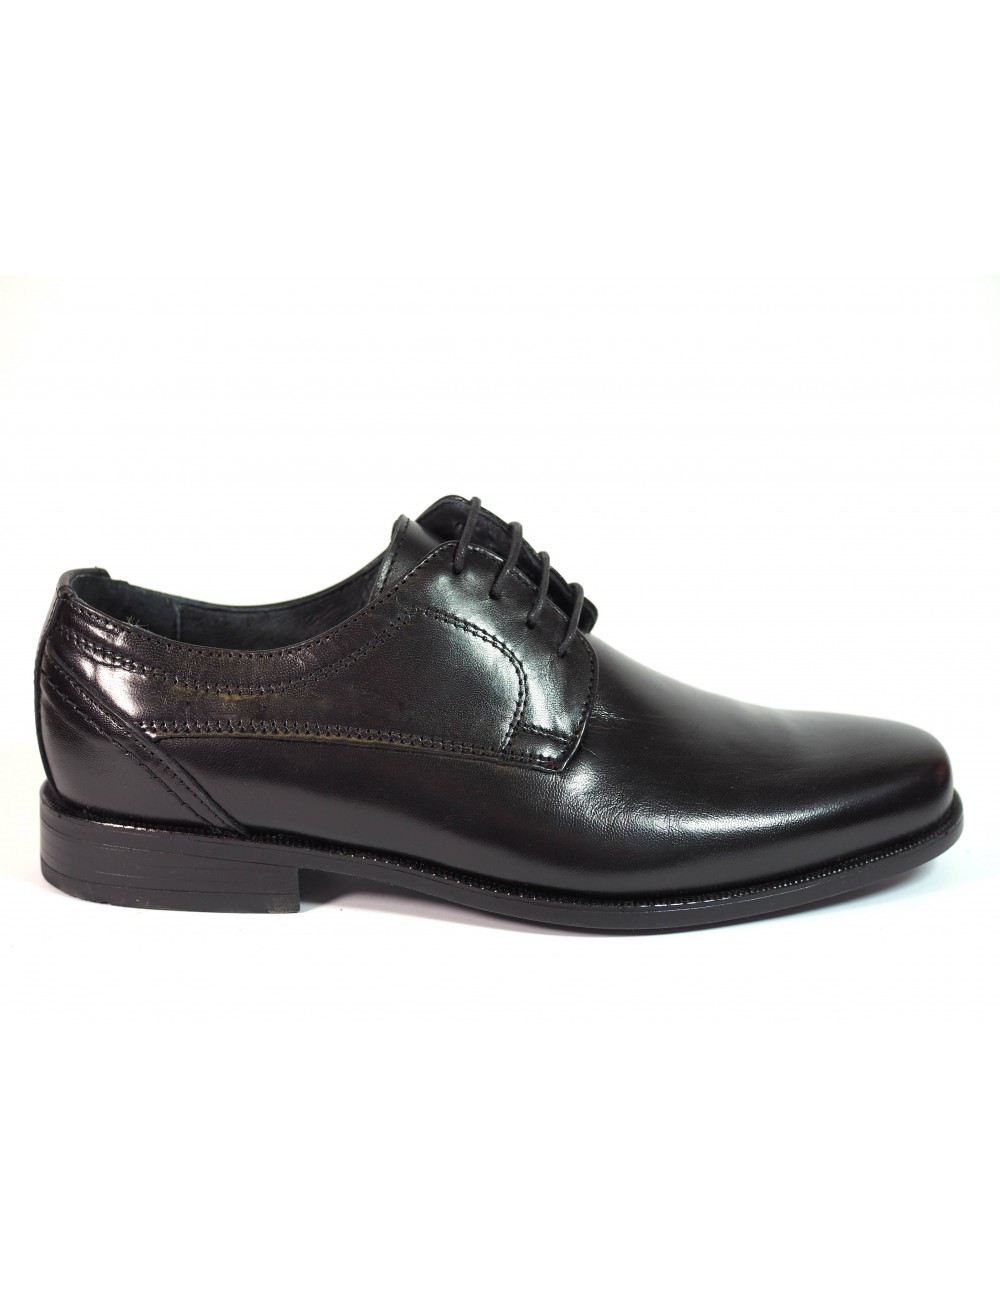 Gadea Zapatos estilo Oxford negro-azul look efecto mojado Zapatos Zapatos formales Zapatos estilo Oxford 